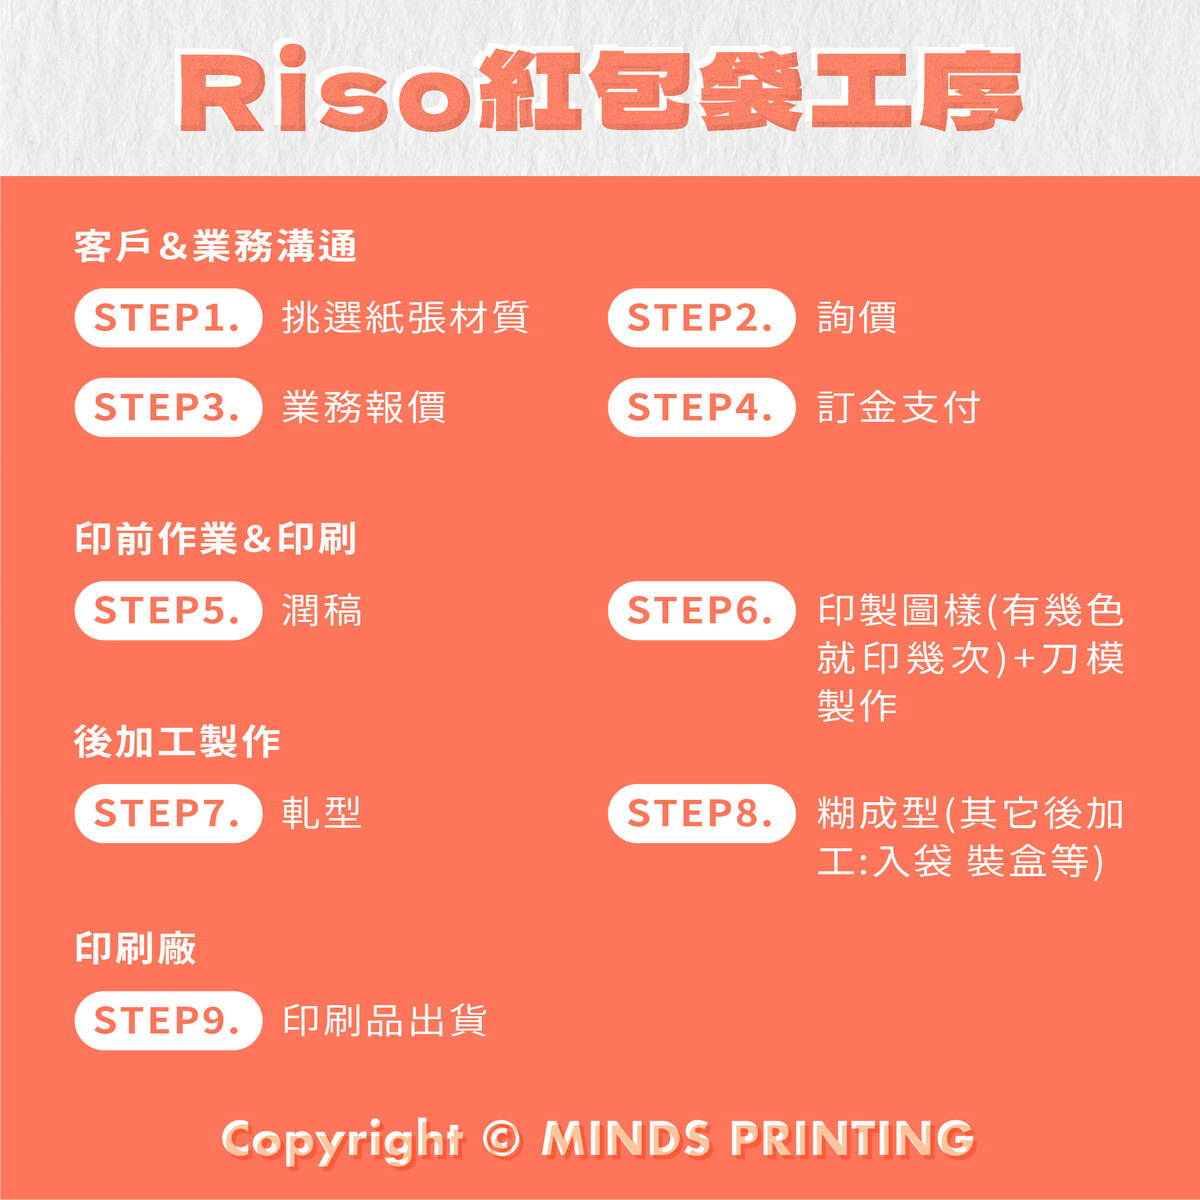 RISO紅包袋這樣做！9大步驟解析給你看－RISO紅包袋工序